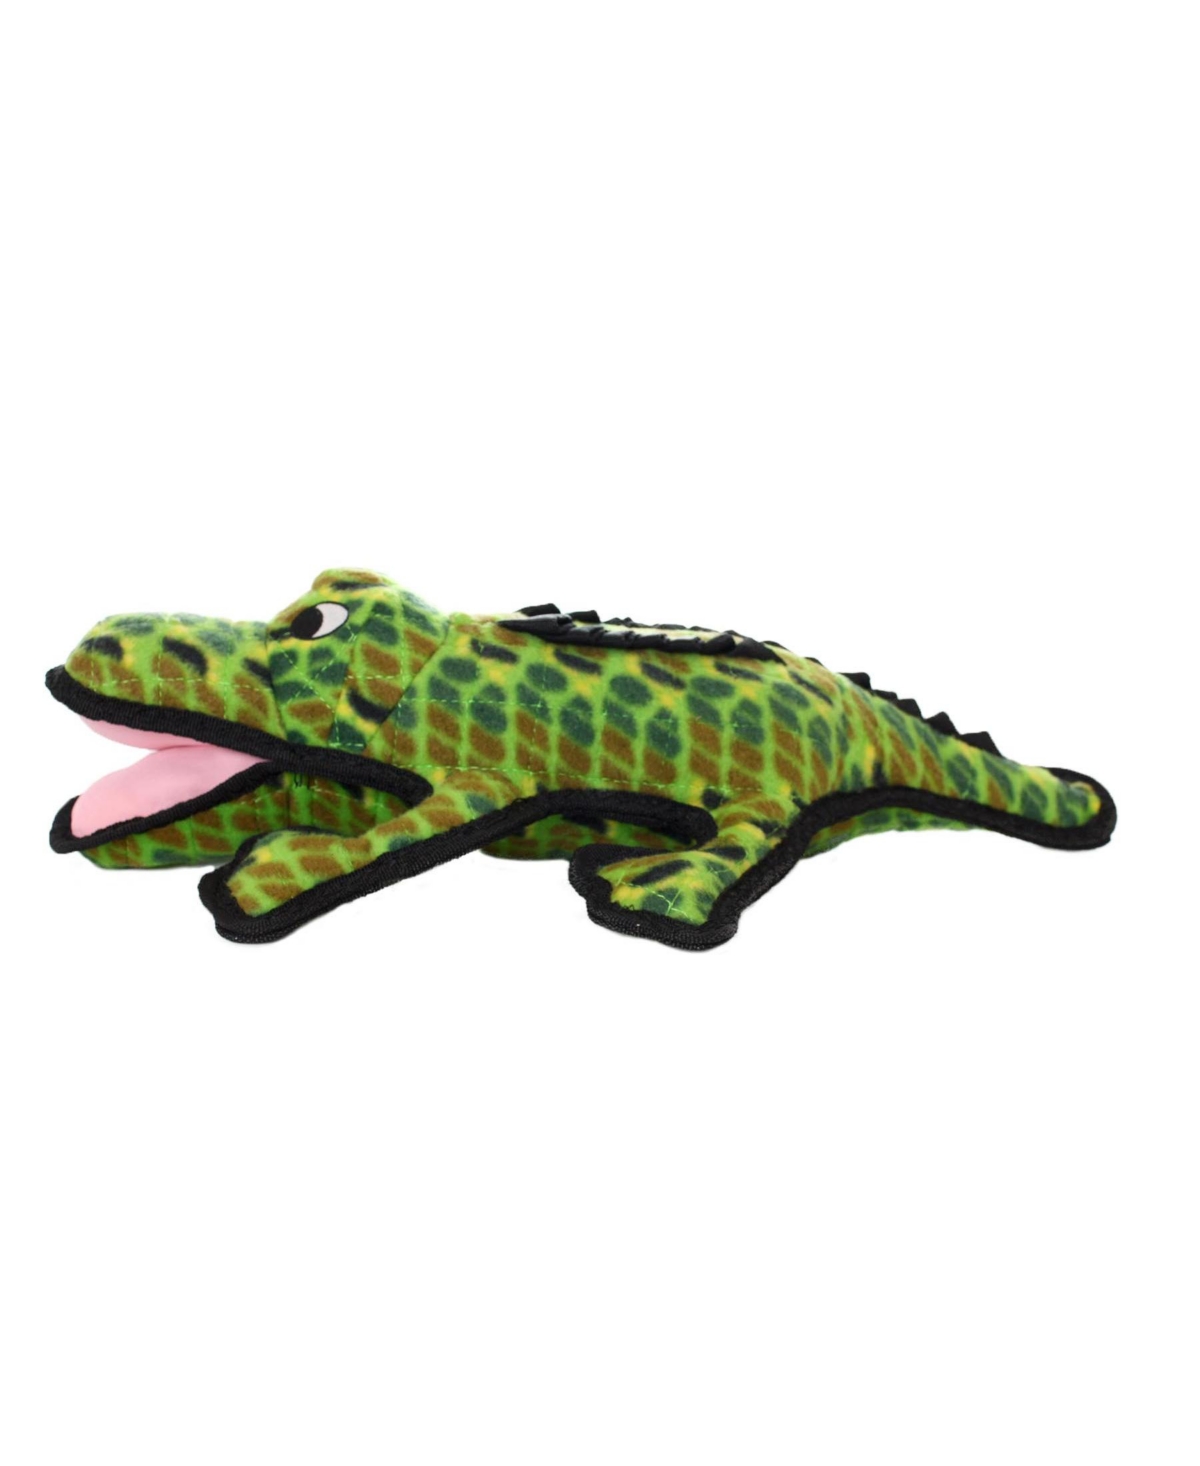 Ocean Creature Alligator, Dog Toy - Open Green